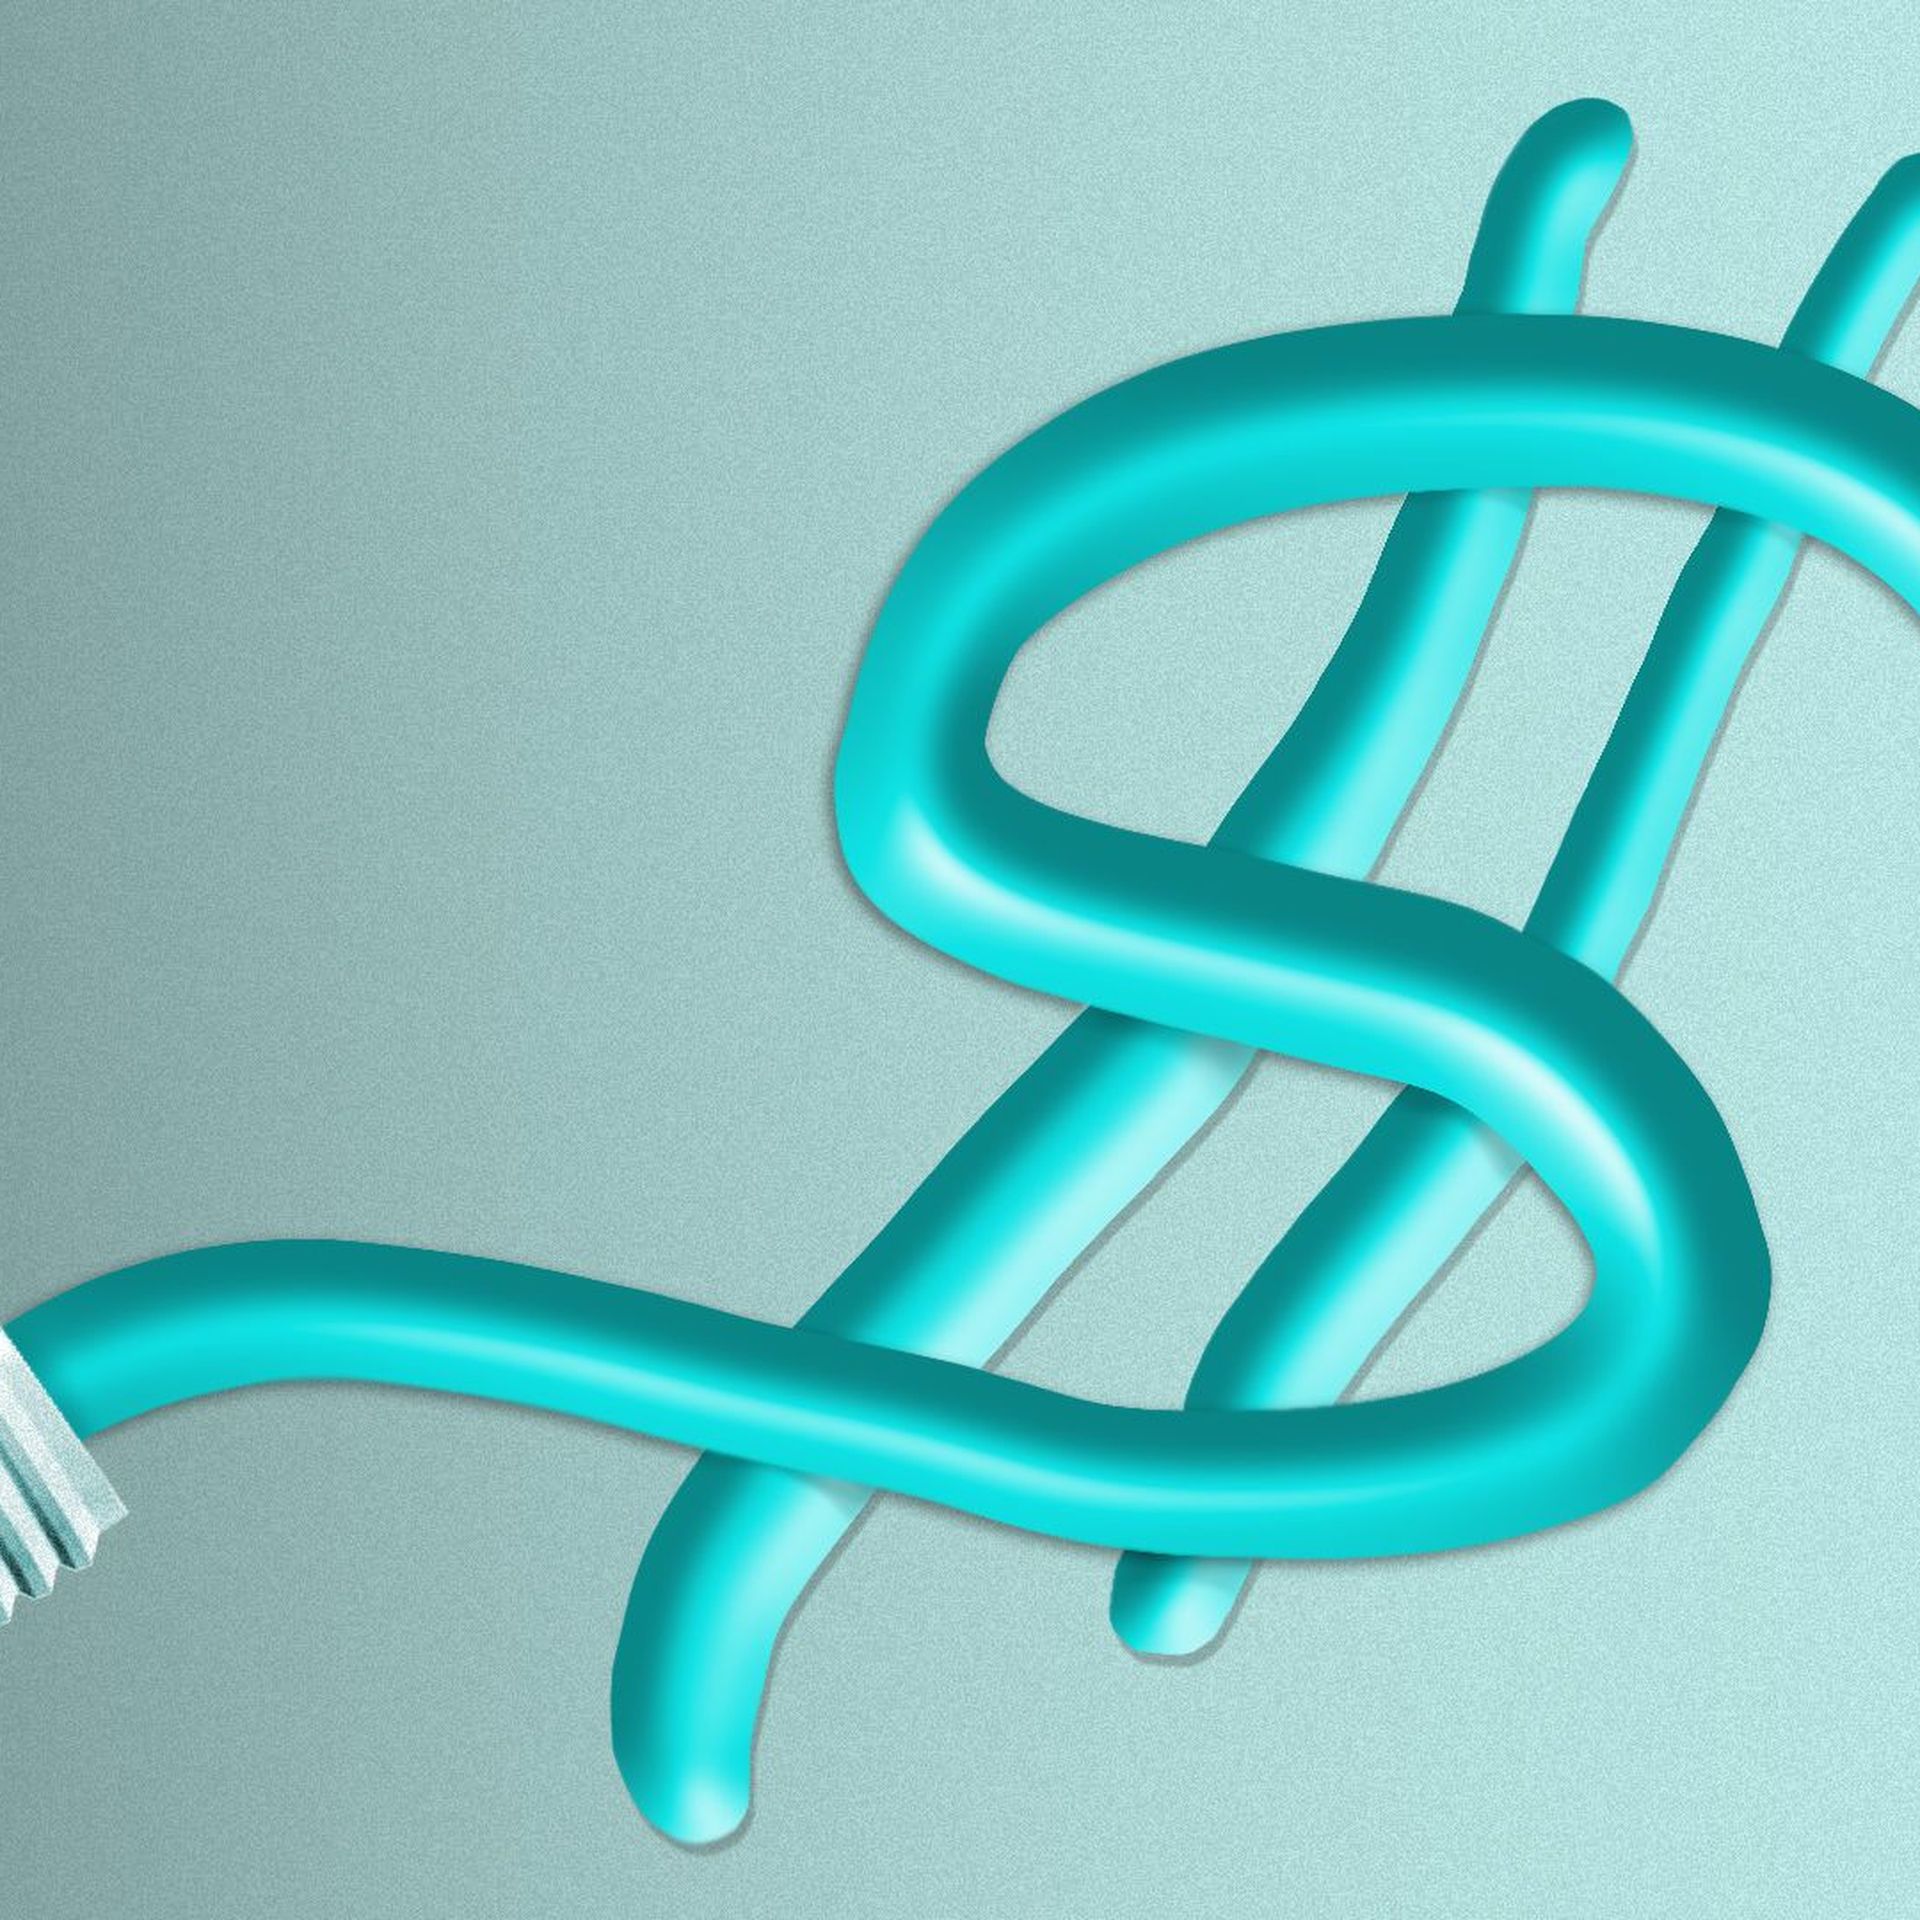 Illustration of toothpaste forming a dollar symbol.